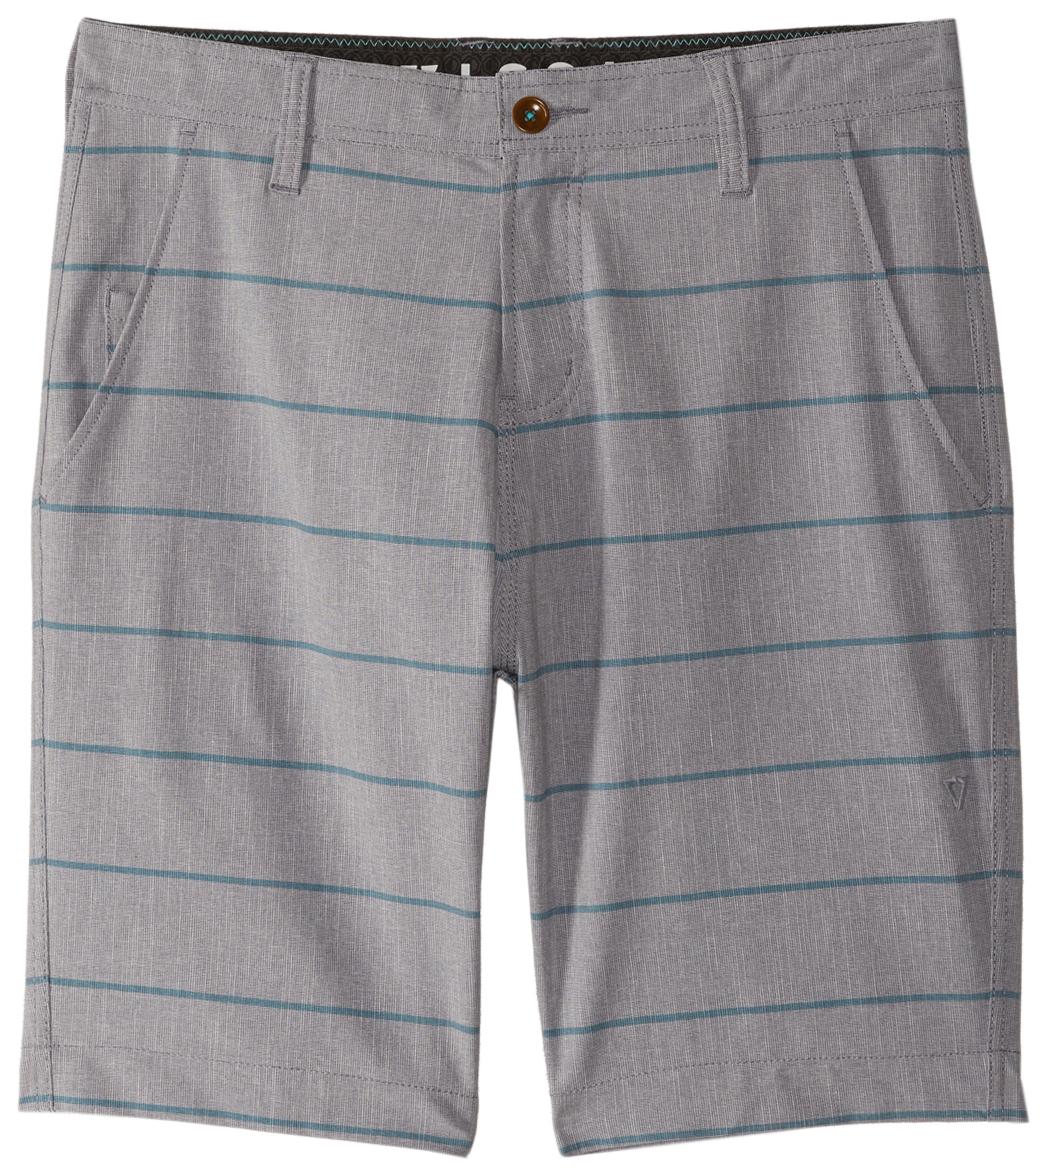 Vissla Men's Fin Rope Hybrid Walkshorts - Coastal Blue 28 Cotton/Polyester/Spandex - Swimoutlet.com